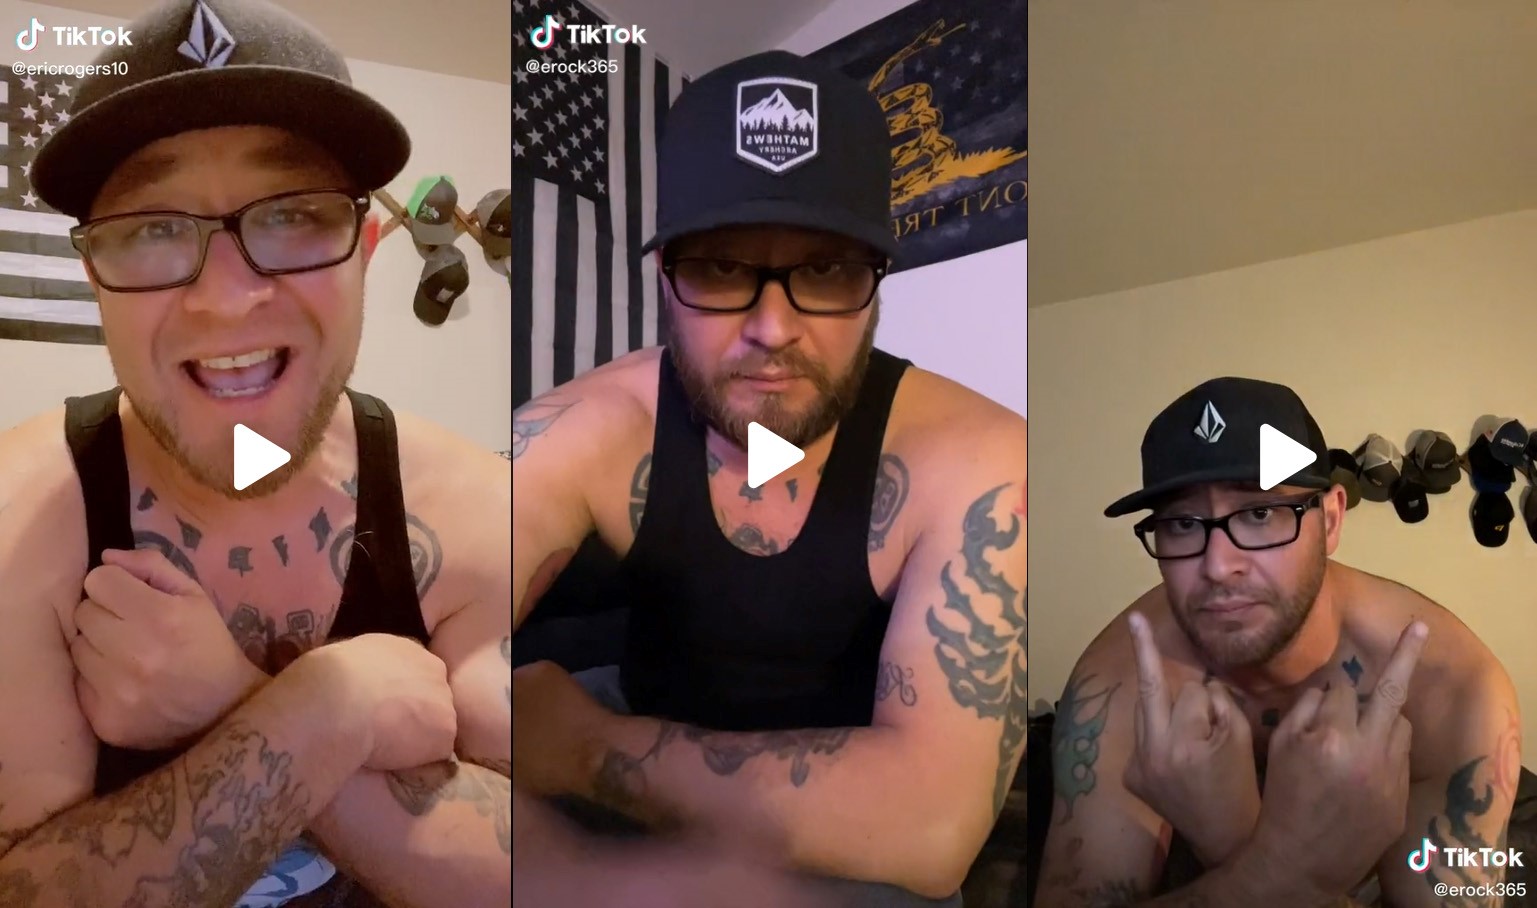 Three tiktok screenshots of Eric Rogers show his upper body and tattoos. 